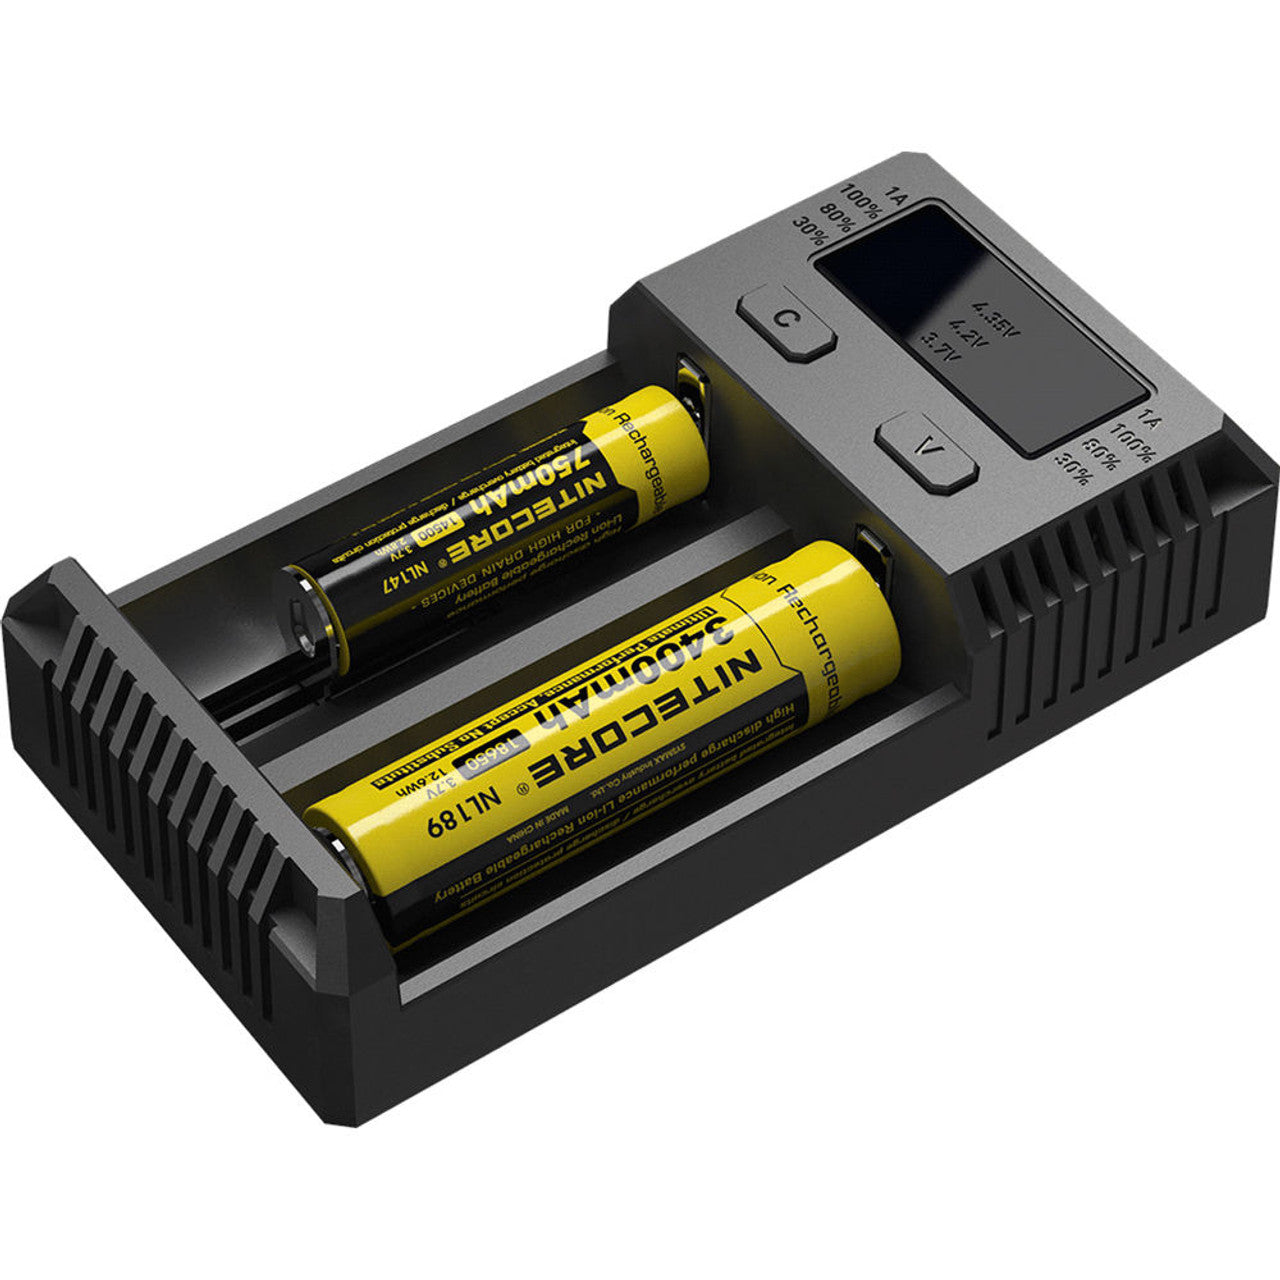 Nitecore i2 v2 Intellicharger Battery Charger